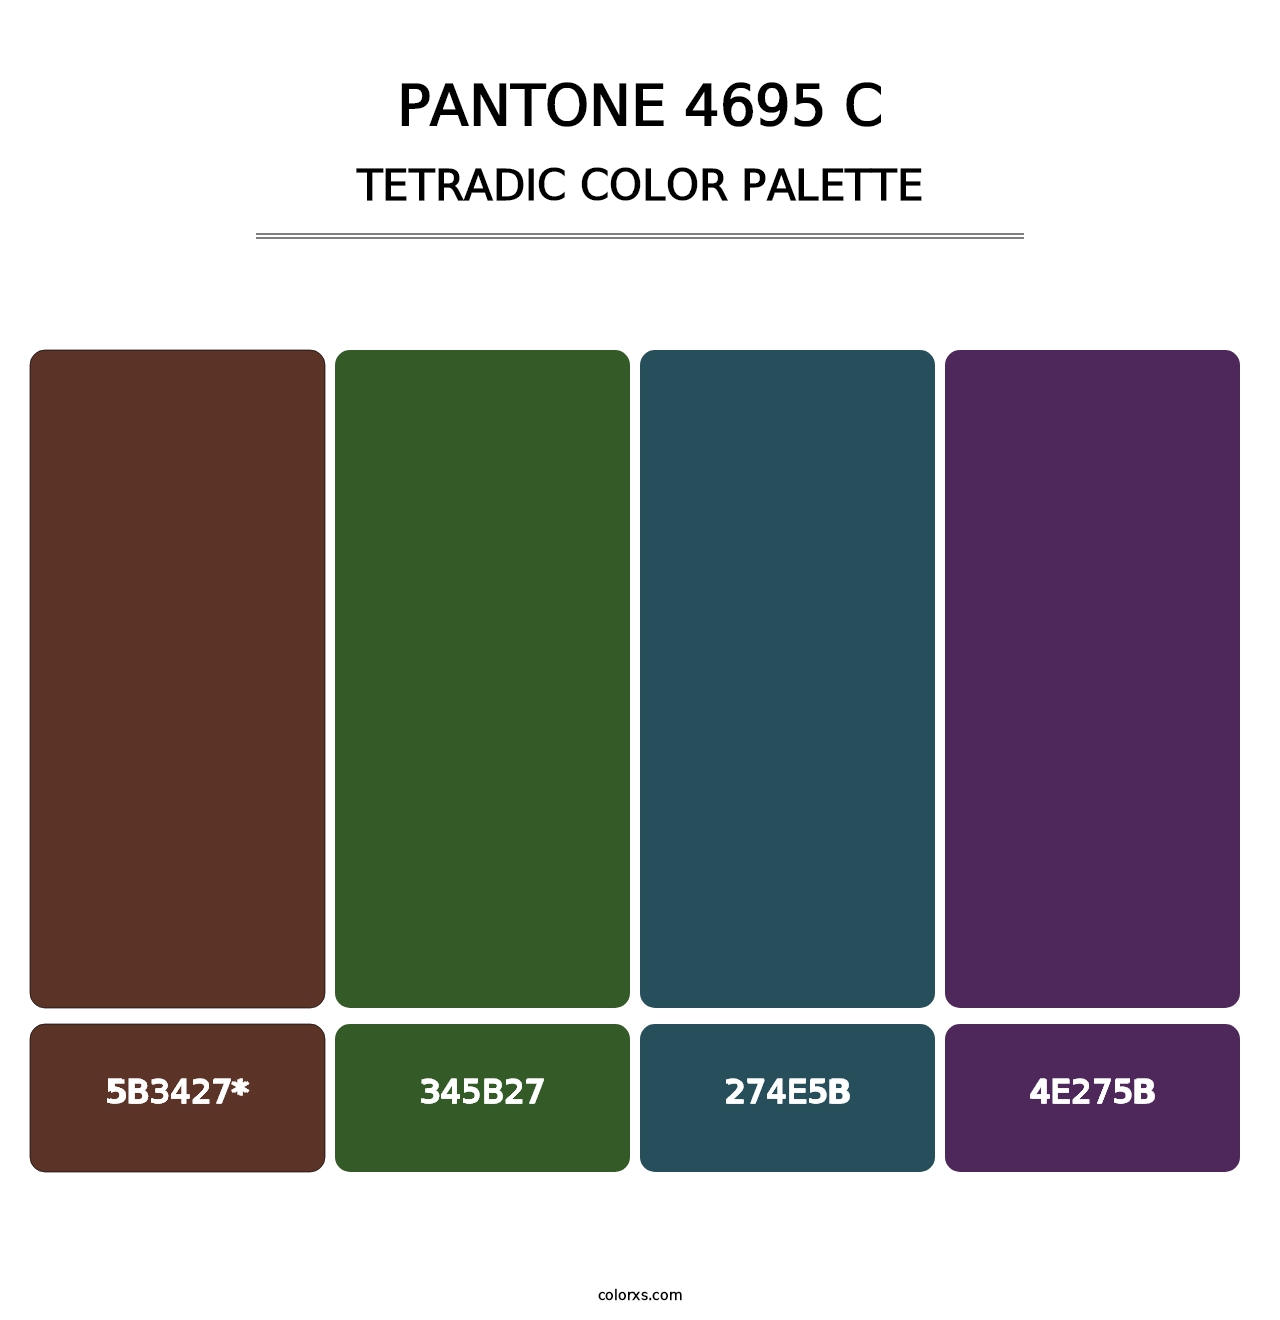 PANTONE 4695 C - Tetradic Color Palette